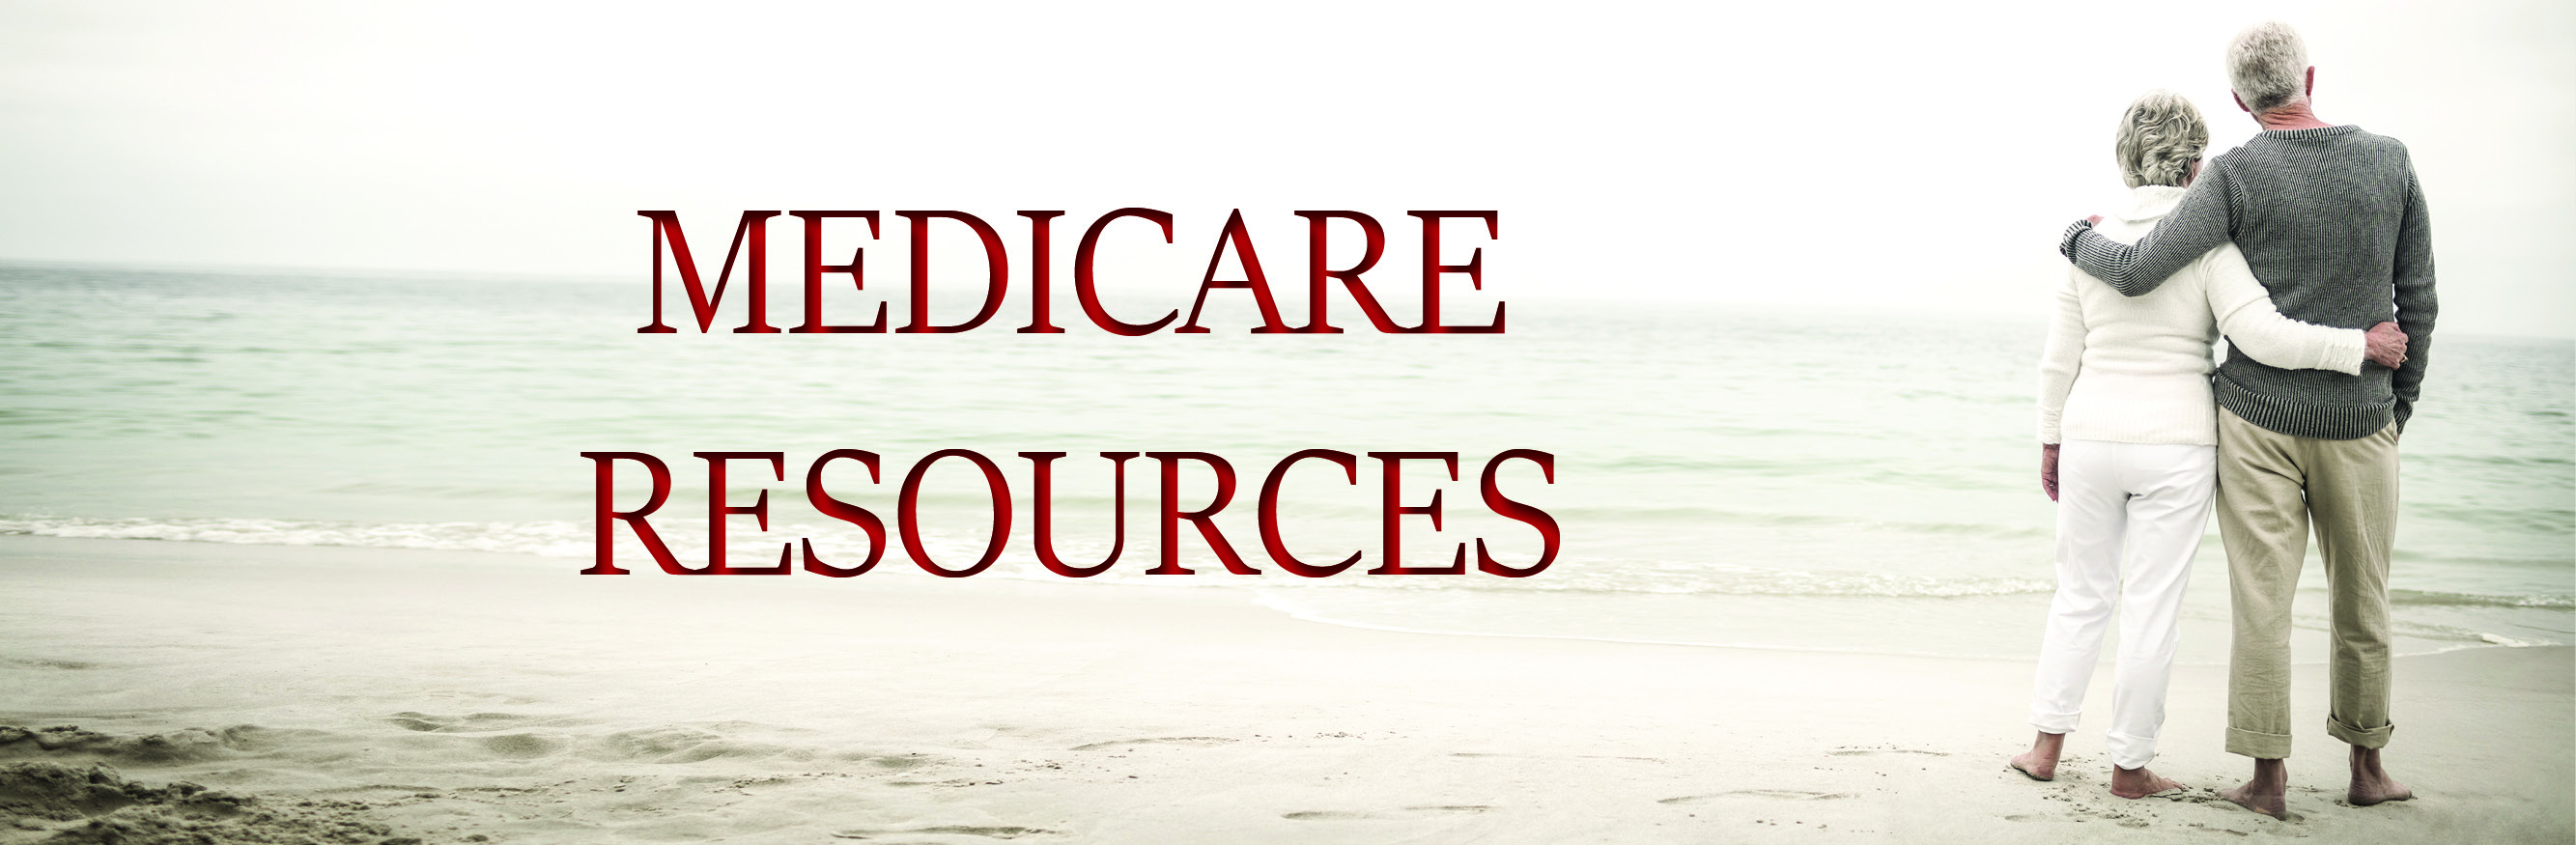 Medicare Resources Image